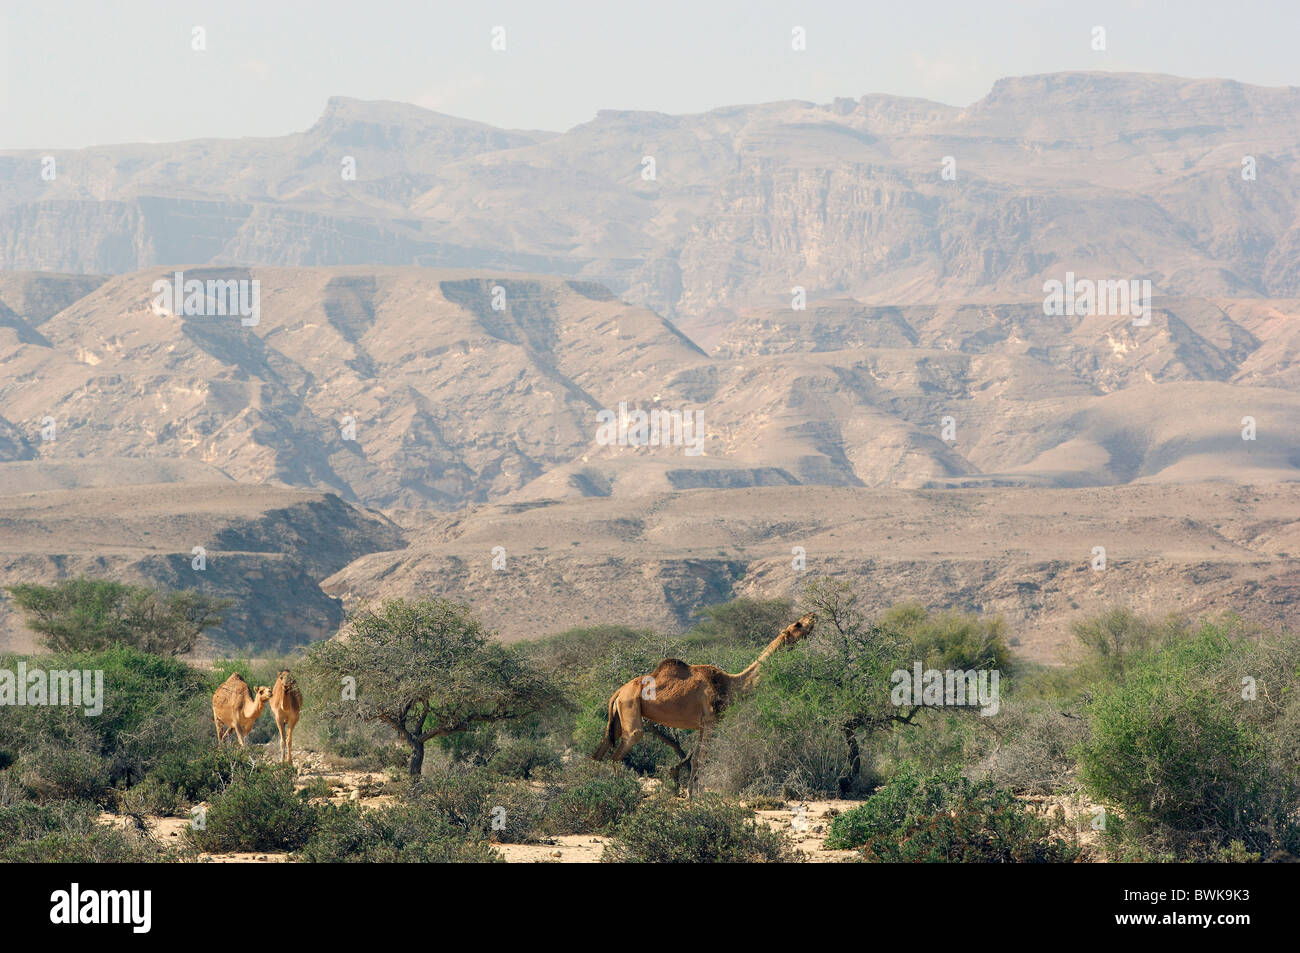 Kamel Kamele Dromedar flossen Sur Coast Tiere Landschaft Landschaft Wüste Berge Oman Arabische Halbinsel Ea Stockfoto